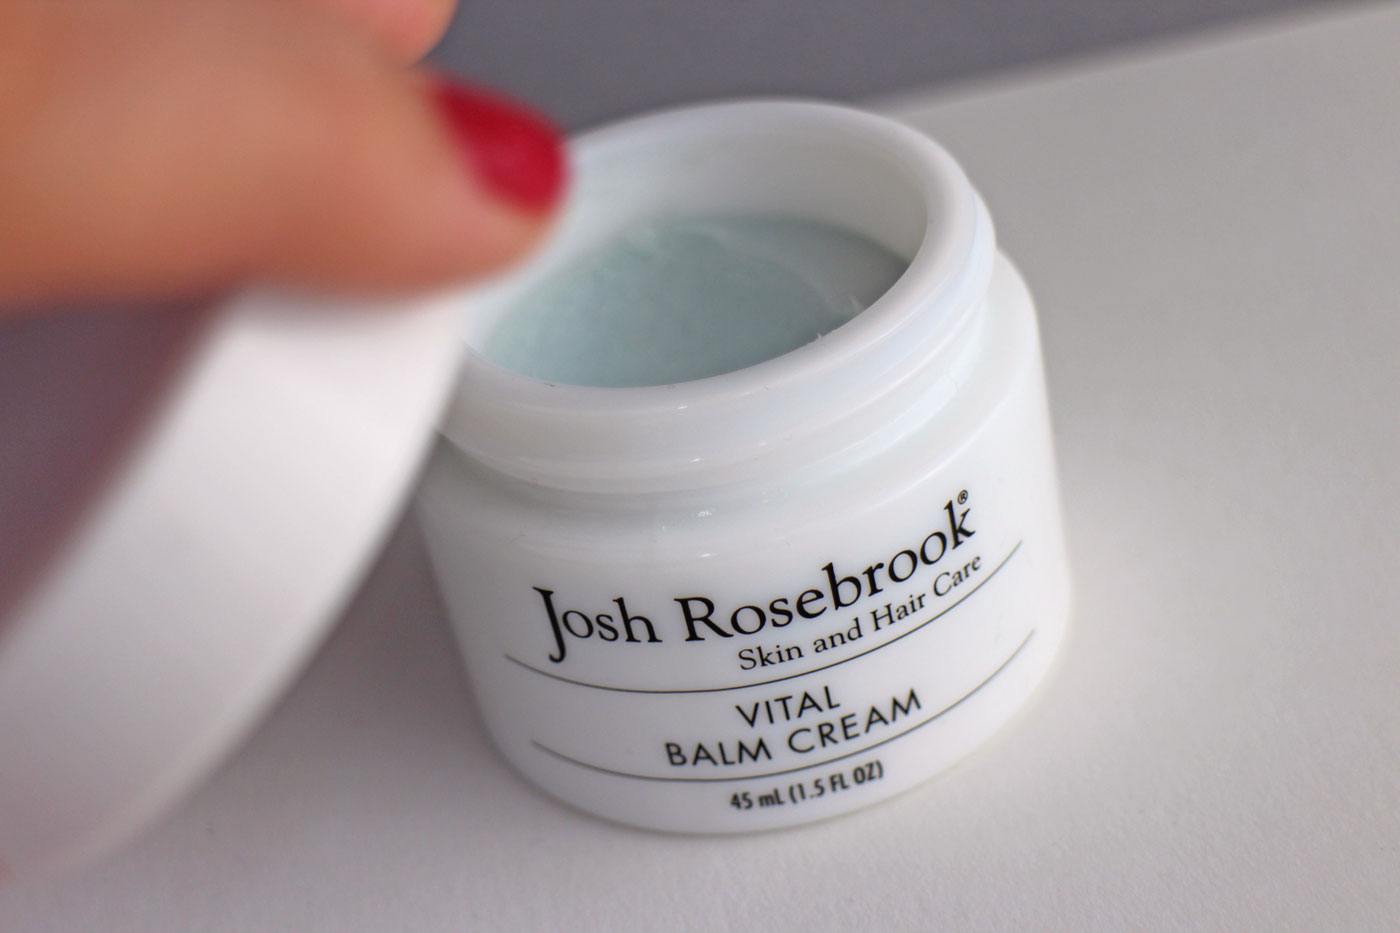 Josh Rosebrook Vital Balm Cream